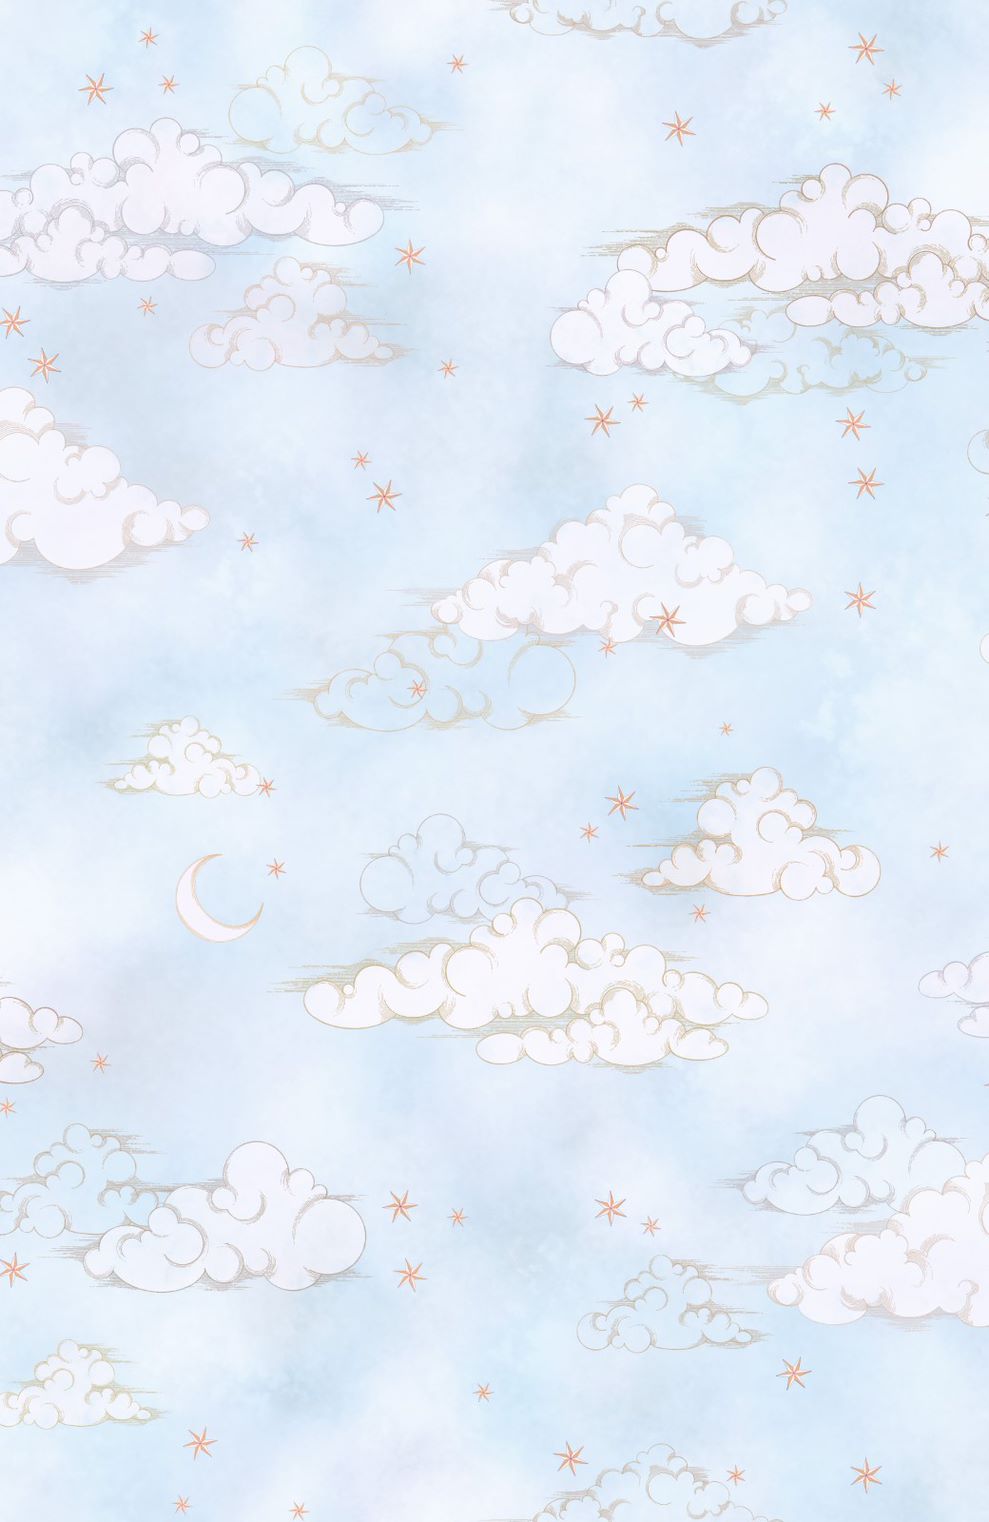 starry-blue-night-sky-stars-clouds-moon-wallpaper